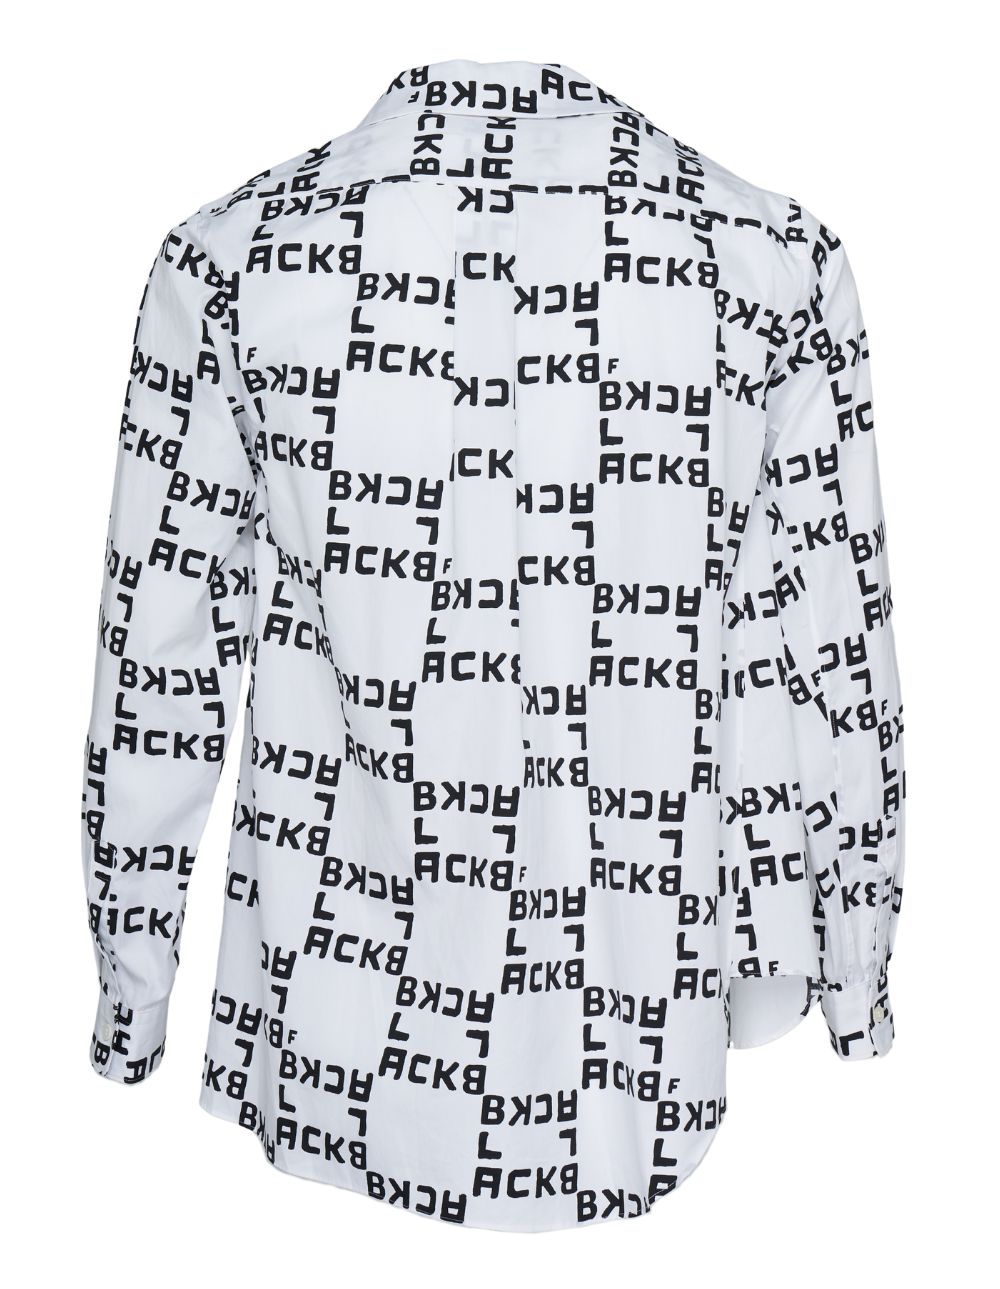 Asymmetic Collar Print Shirt